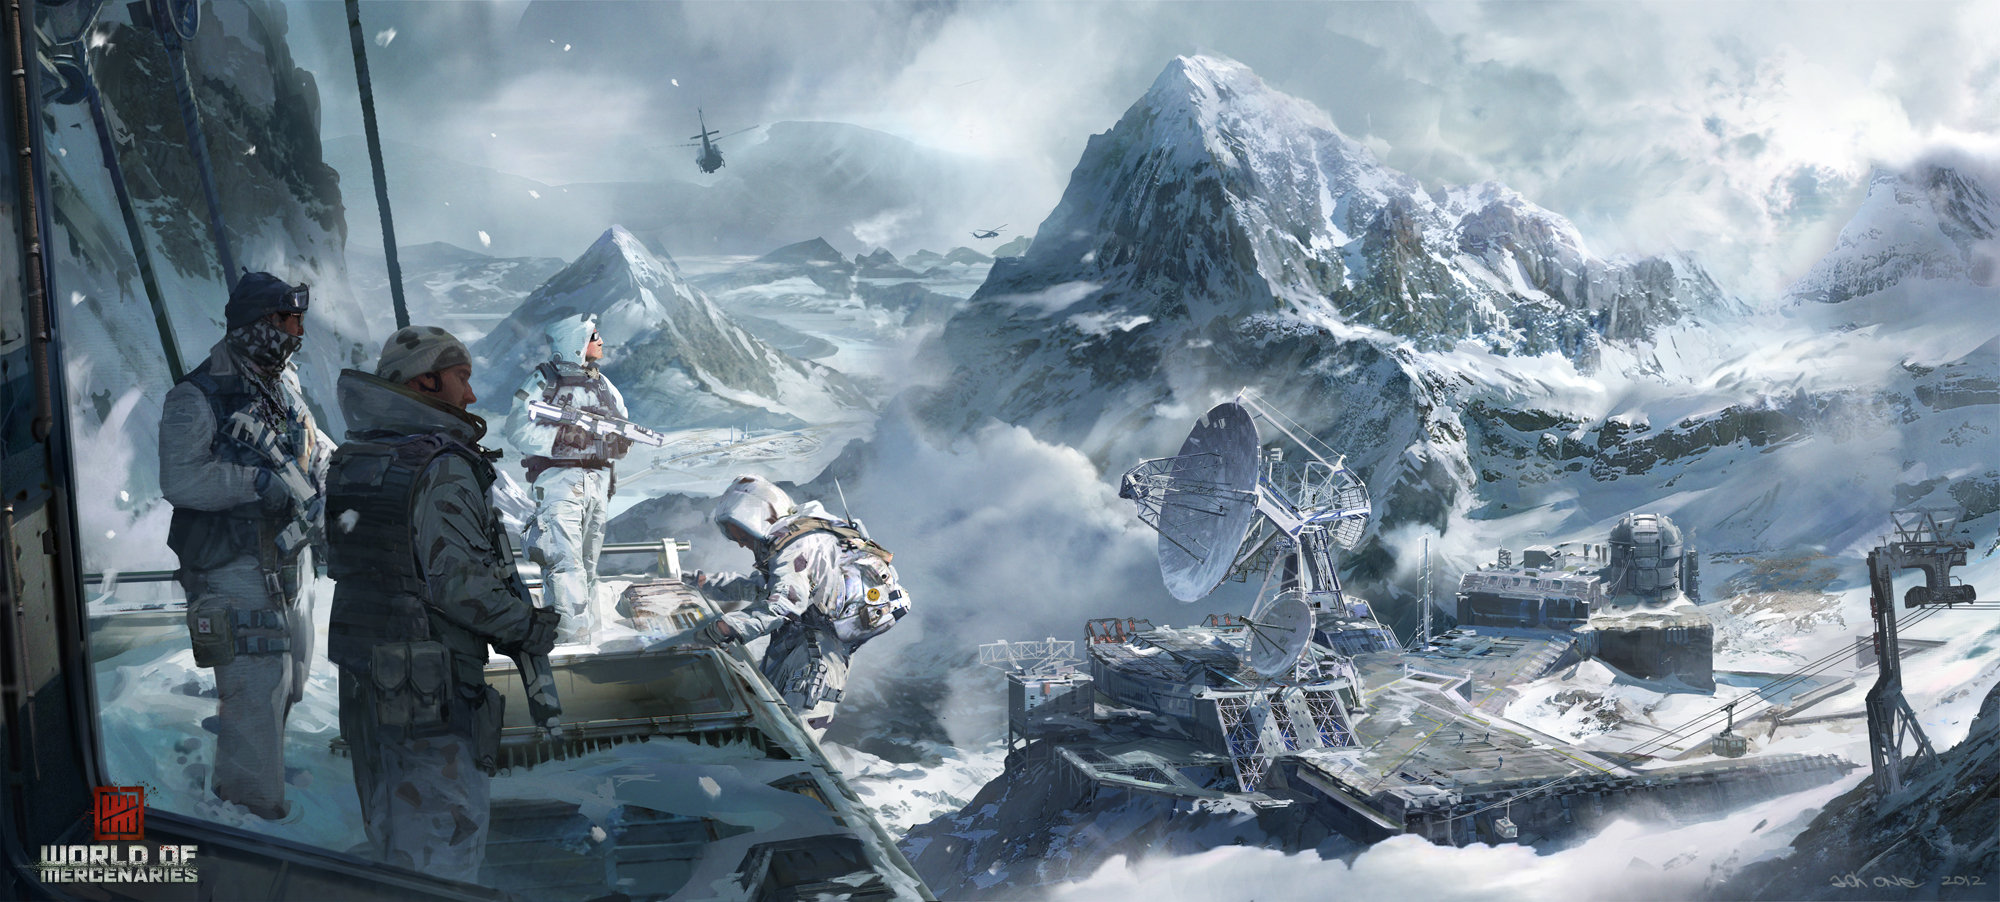 Video Game World Of Mercenaries HD Wallpaper | Background Image